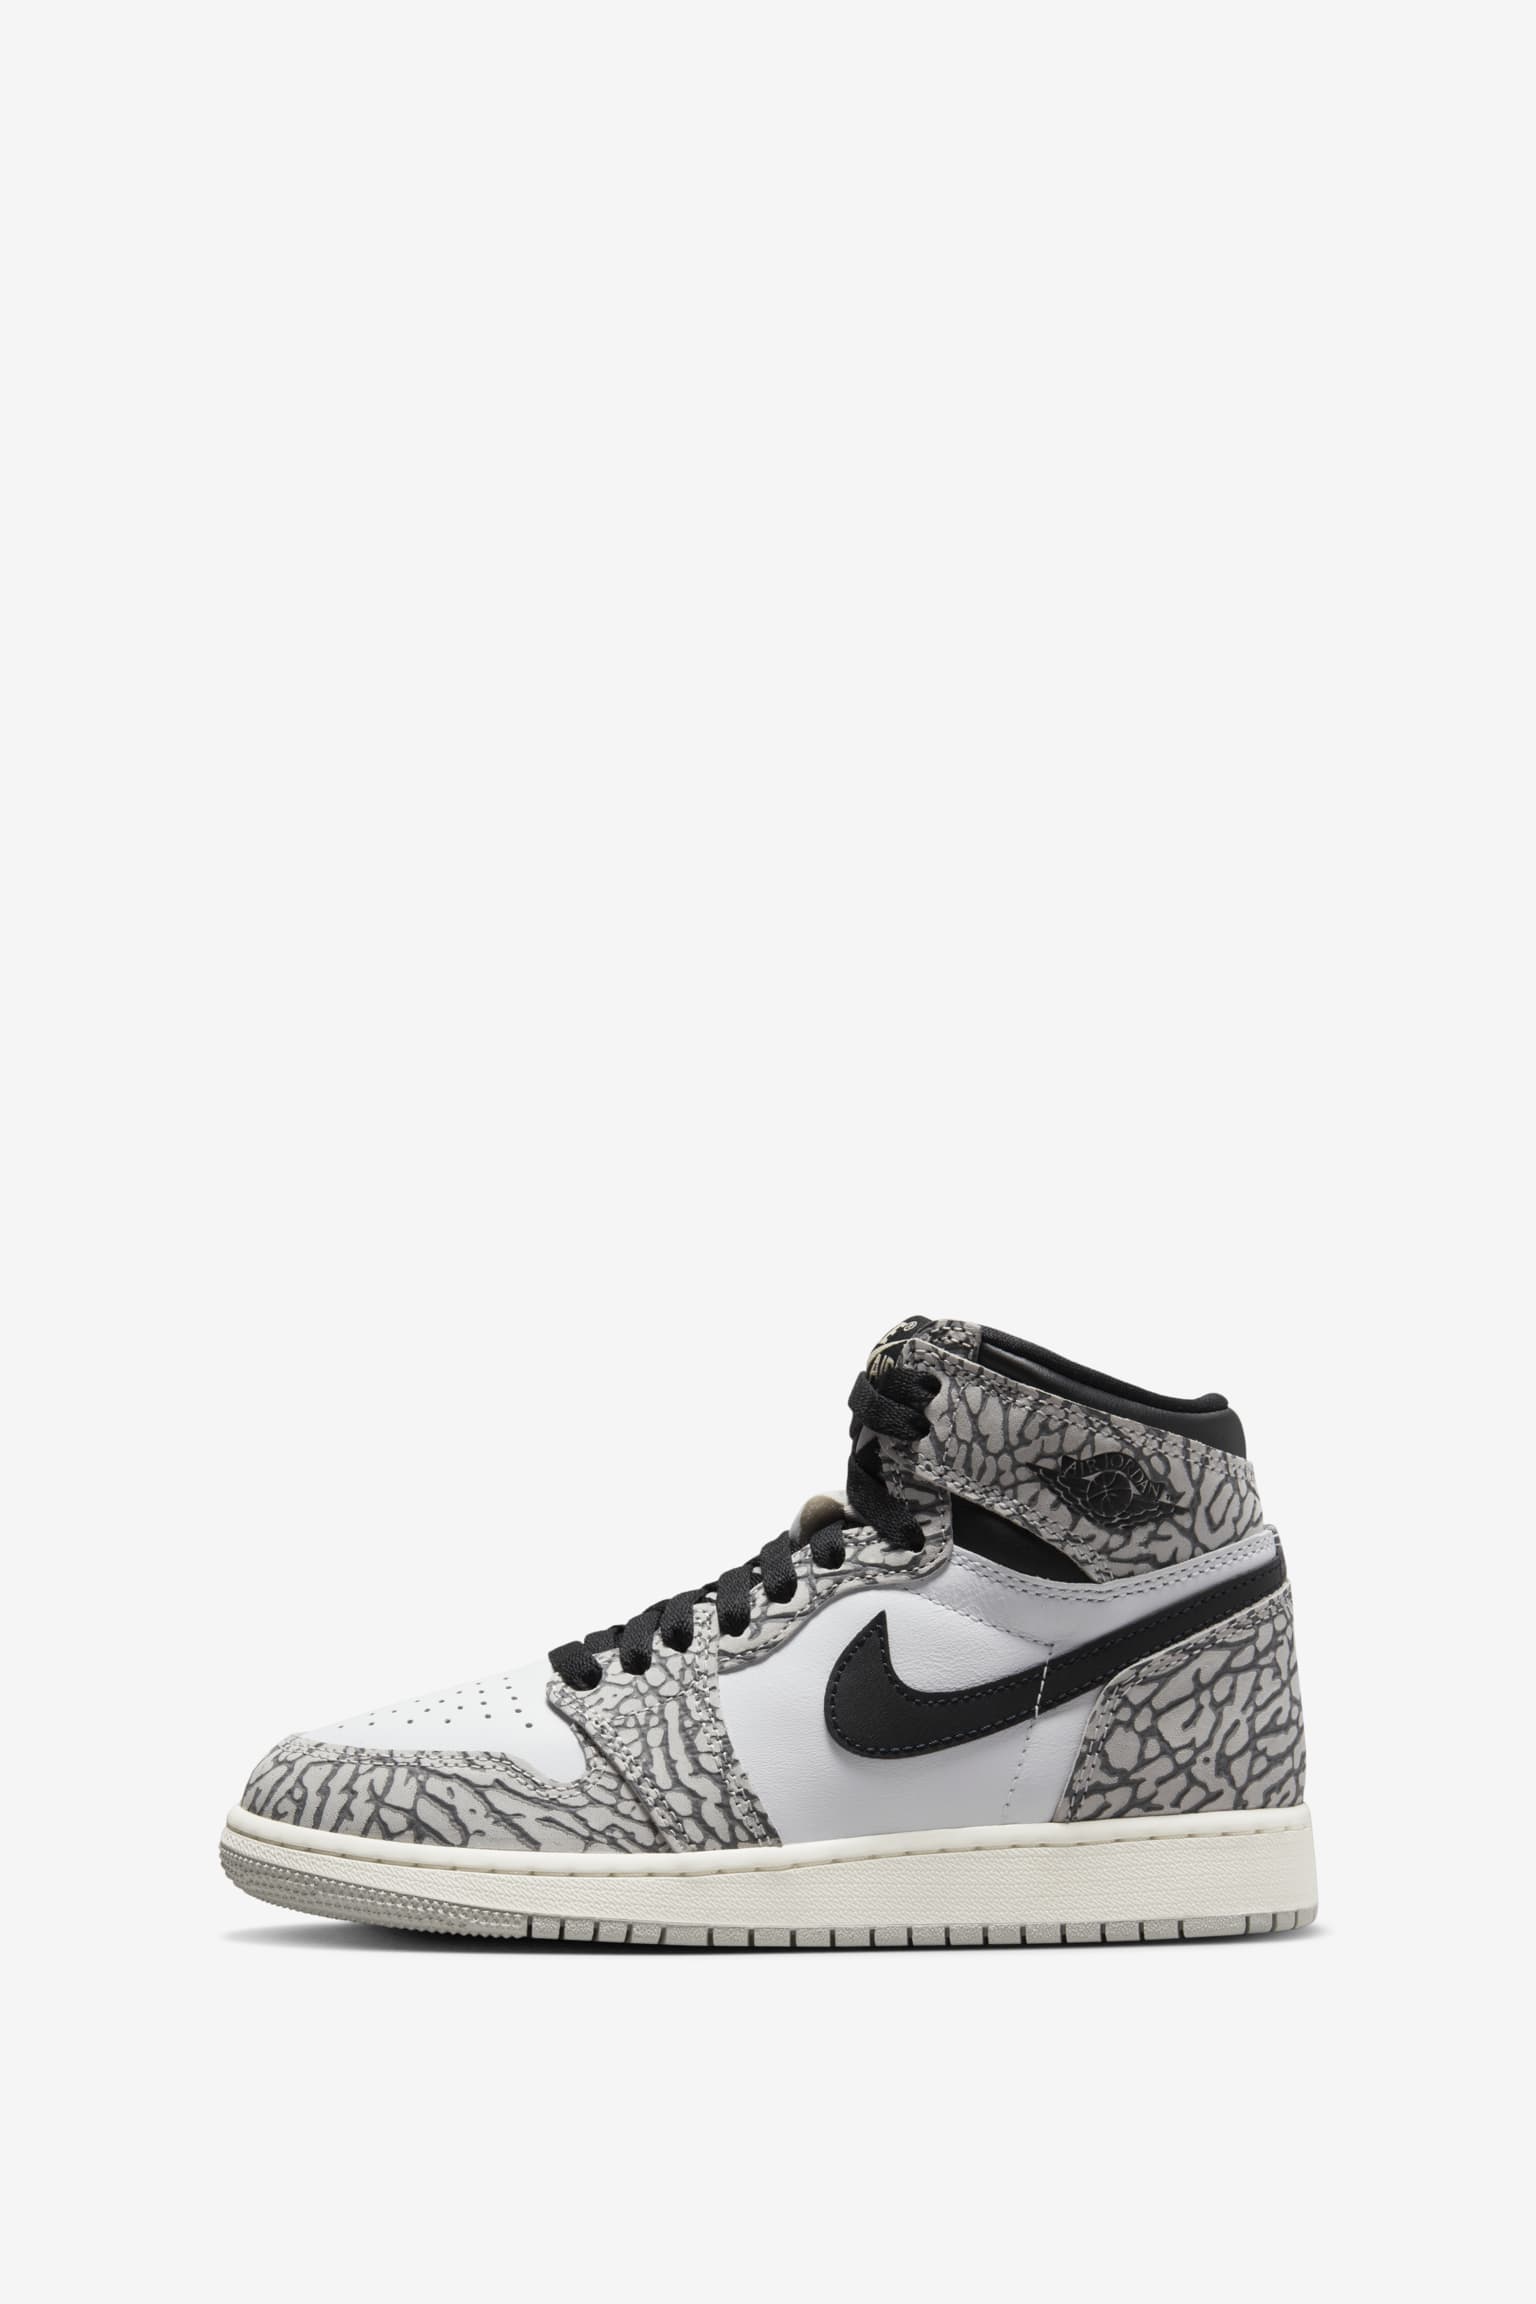 Air Jordan 1 'White Cement' (DZ5485-052) Release Date. Nike SNKRS ID